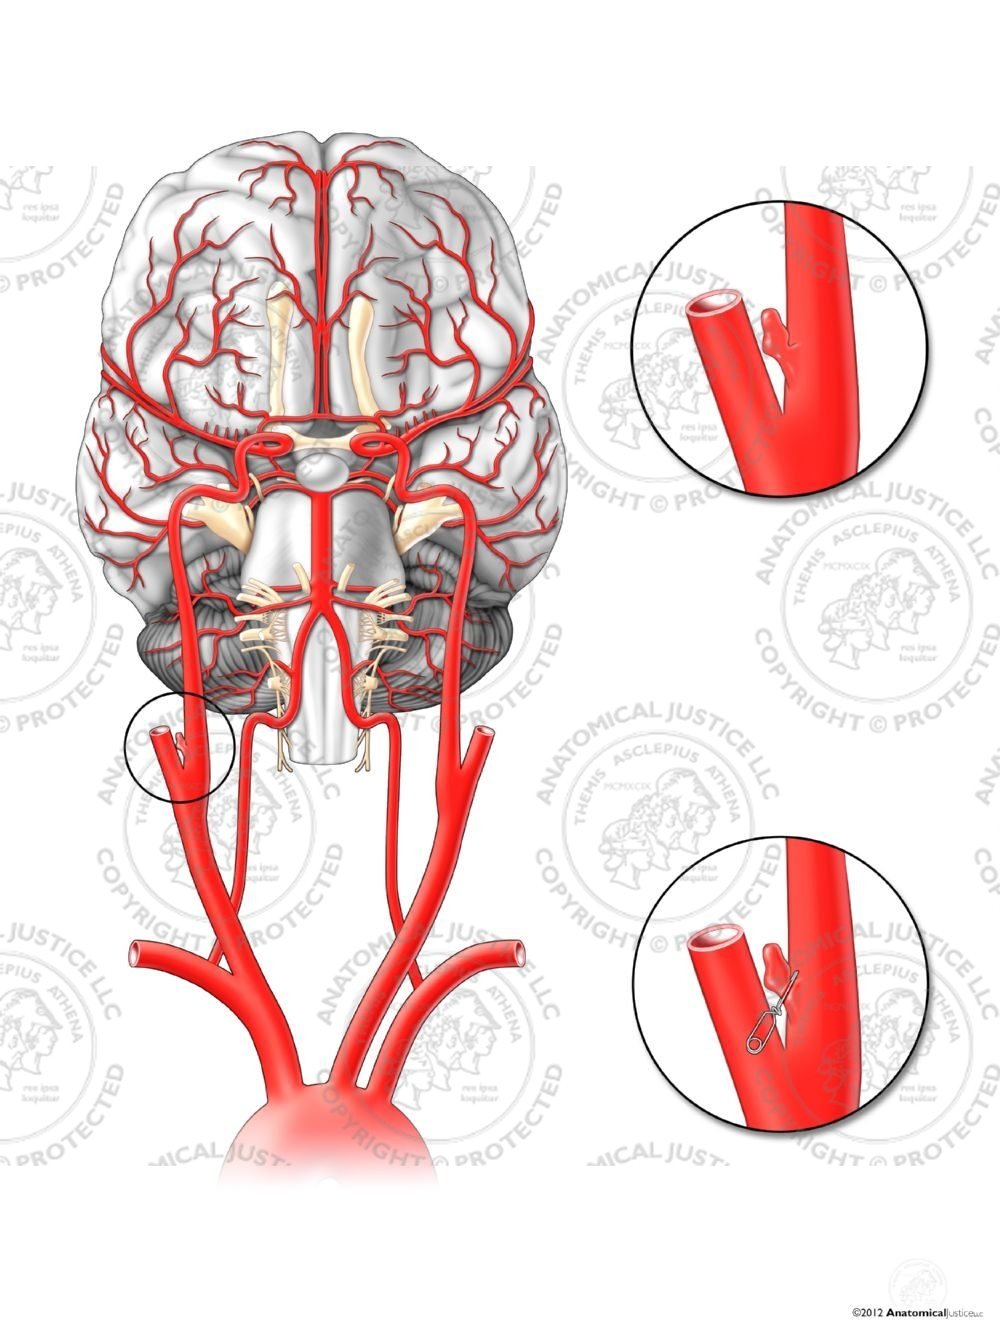 Right Internal Carotid Artery Aneurysm – No Text